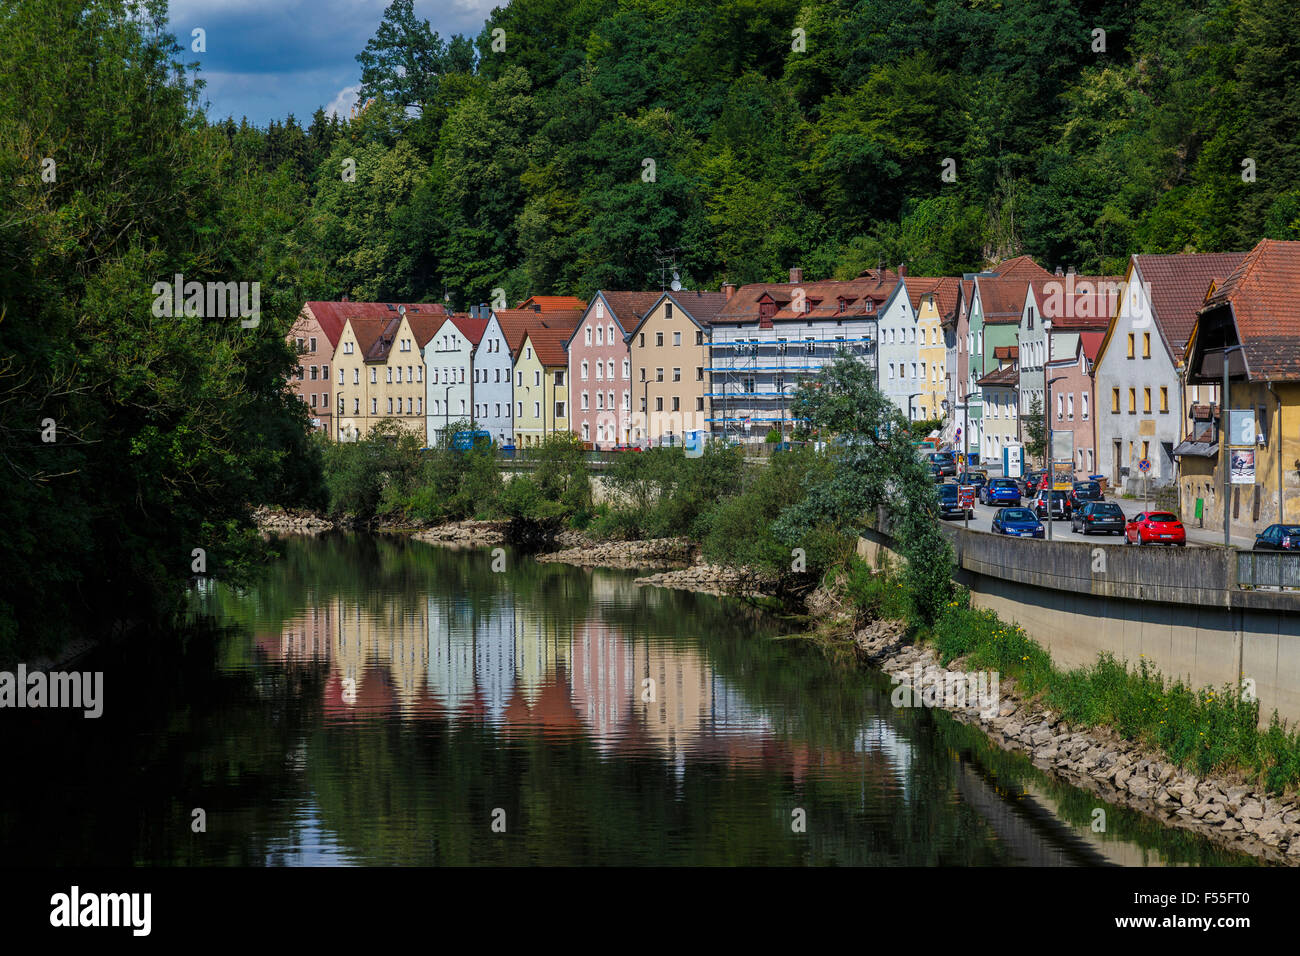 Properties alongside the Ilz river, tributary of the Danube, Passau, Germany. Stock Photo